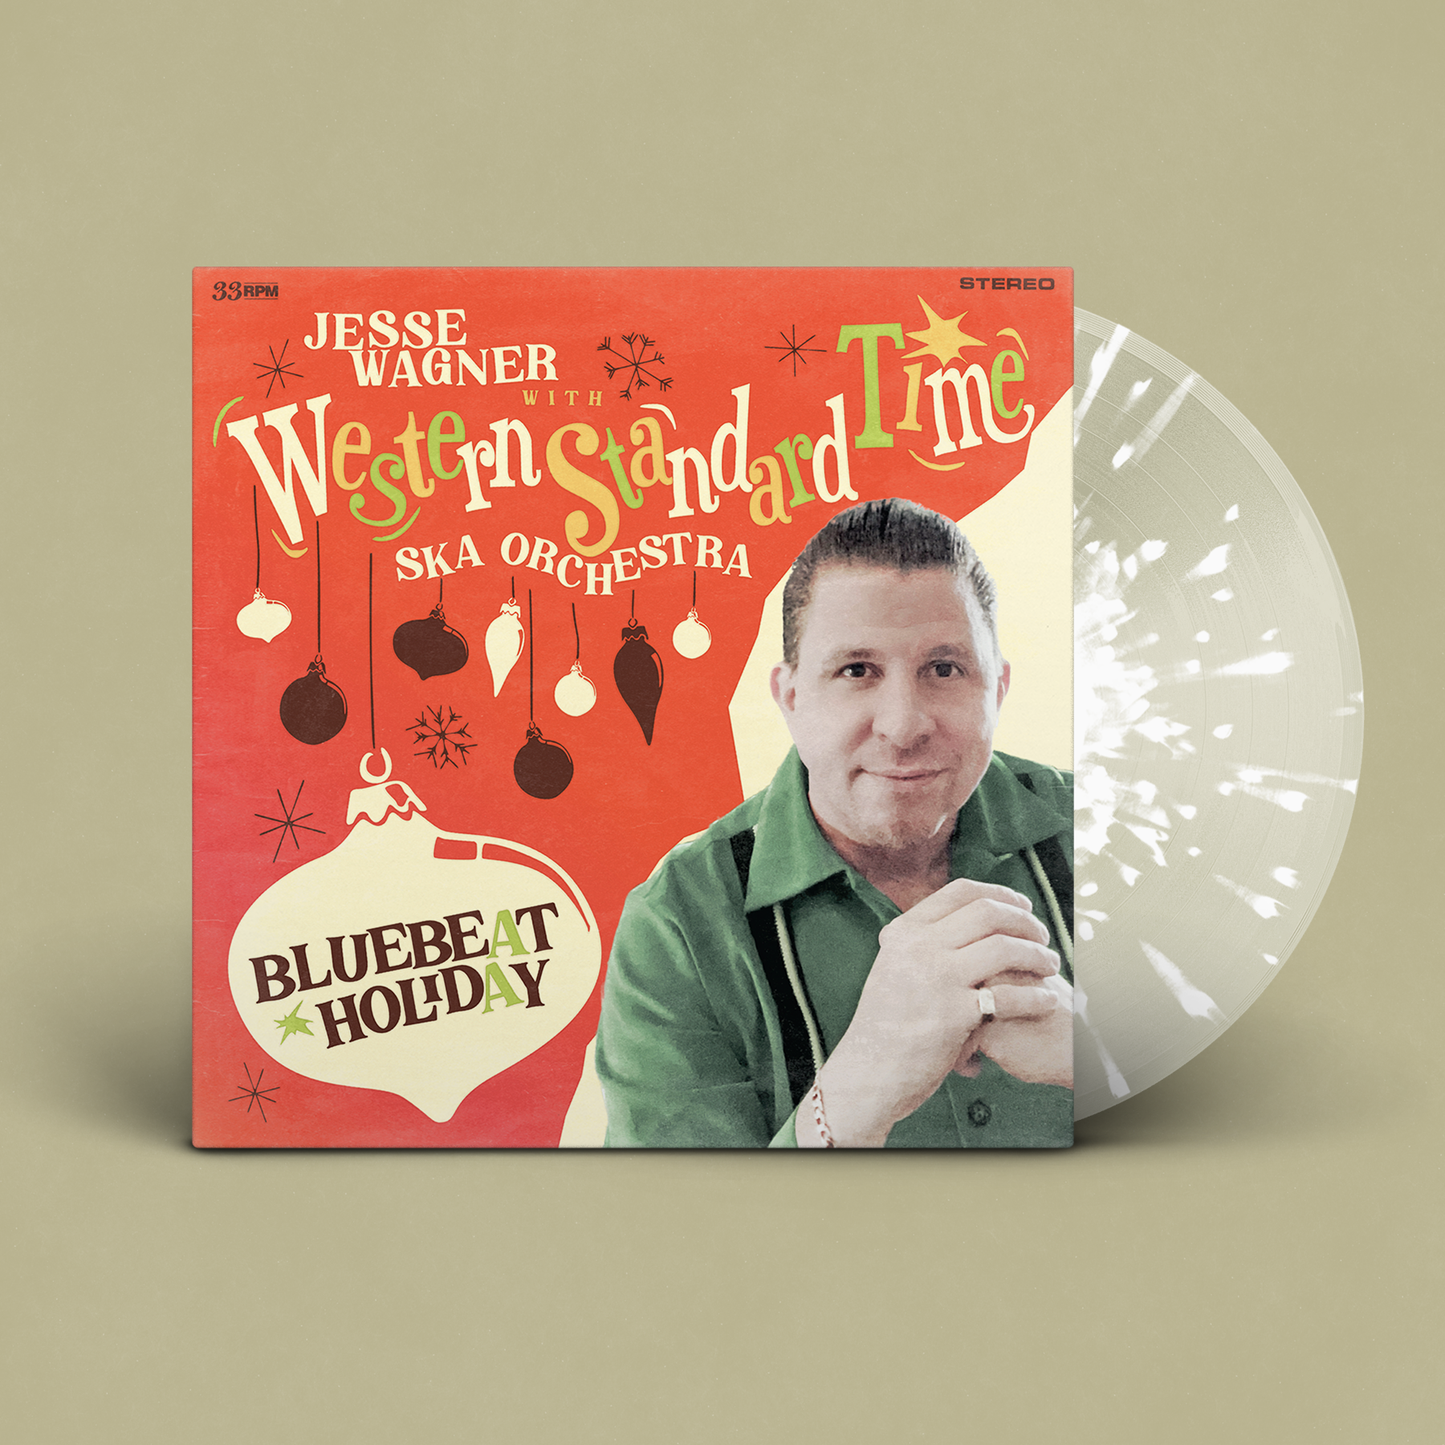 Jesse Wagner & Western Standard Time Ska Orchestra "Bluebeat Holiday" LP